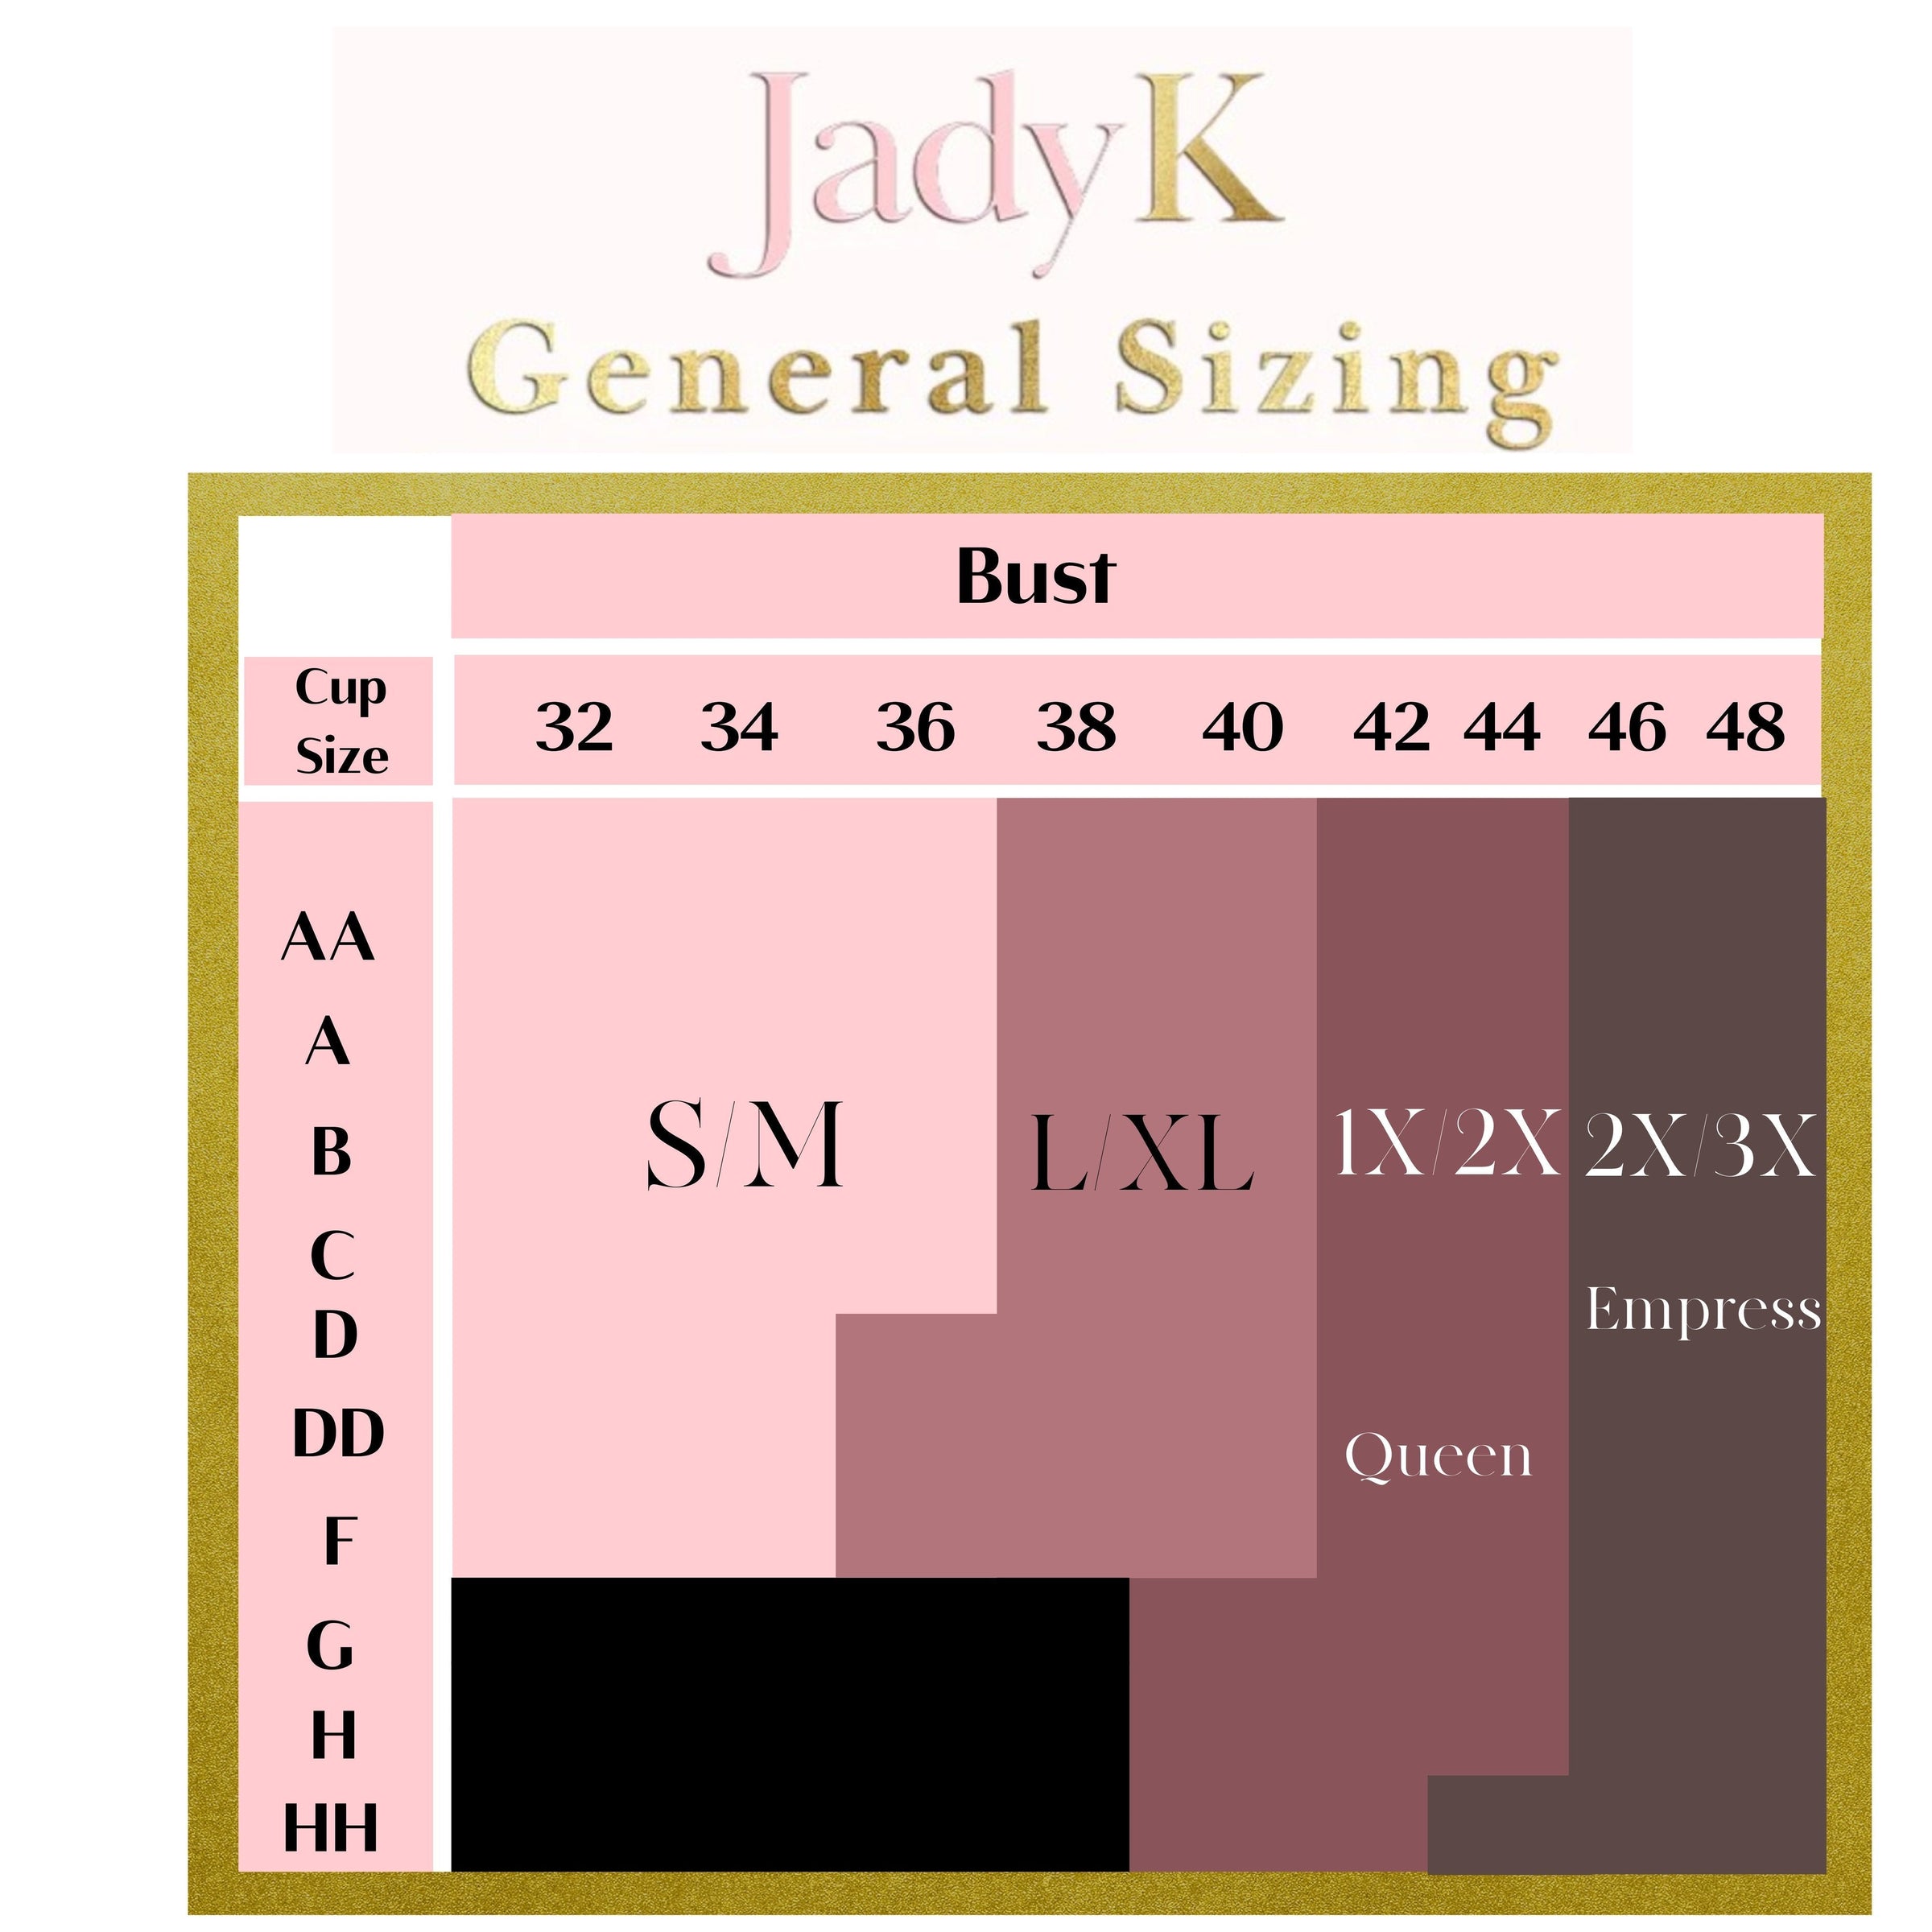 JadyK Arya Lux Bralette-Silk Black